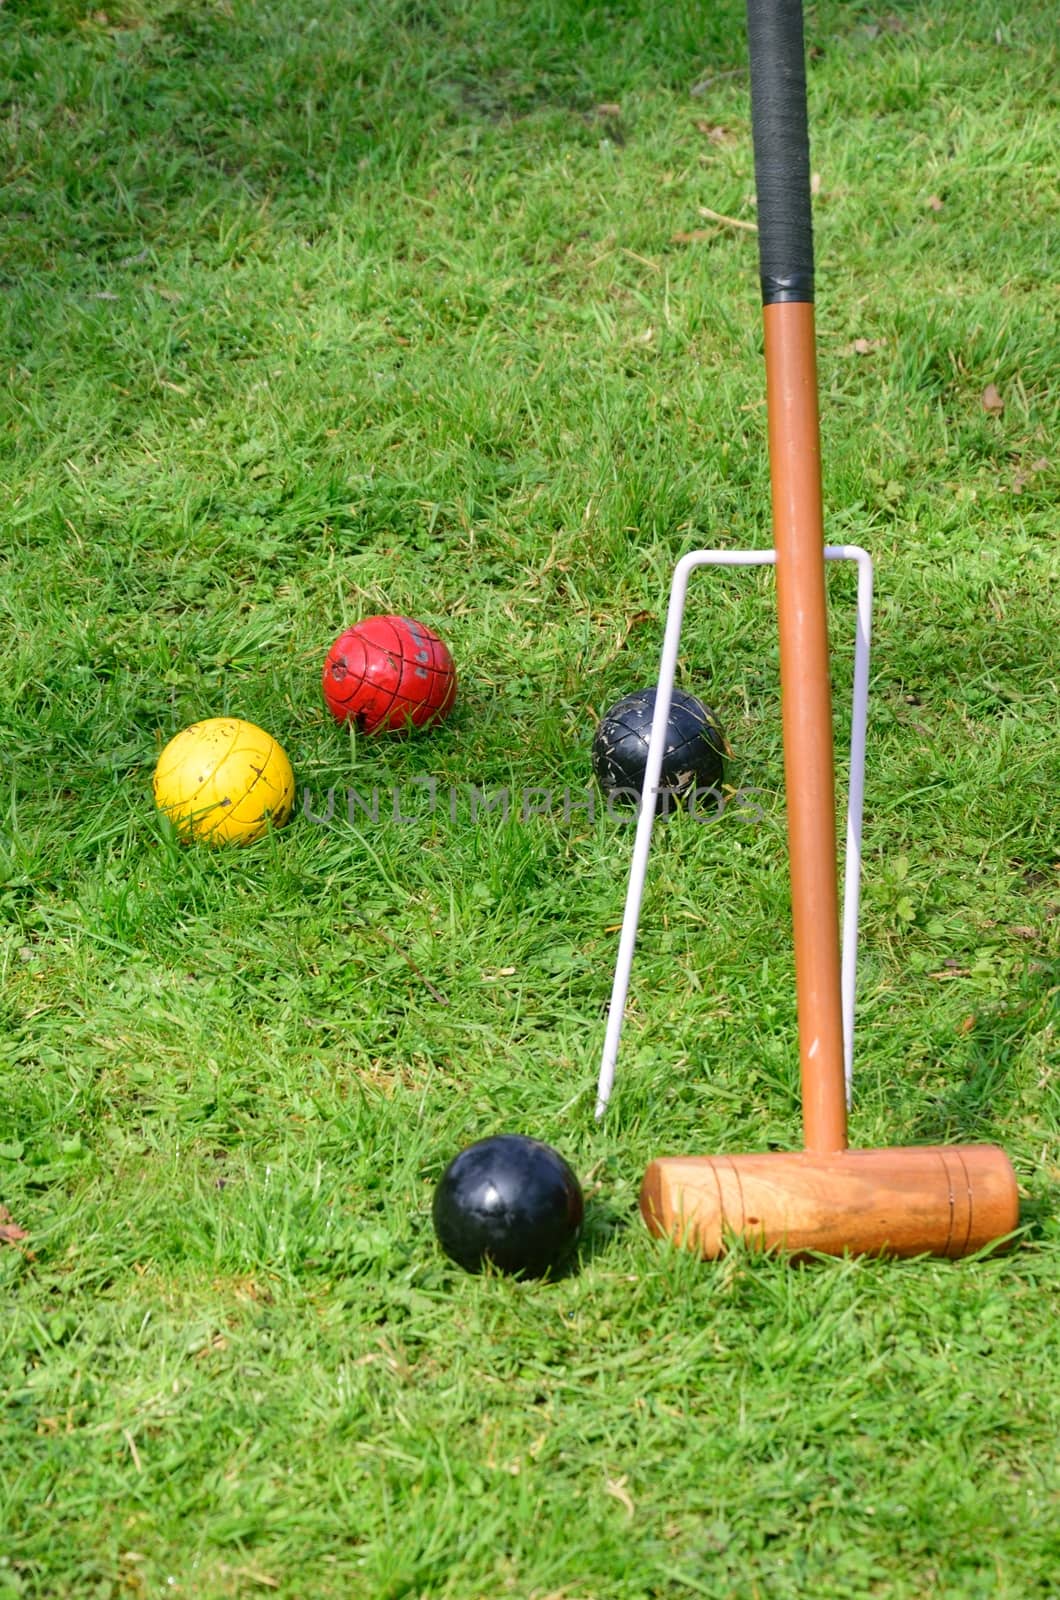 Croquet mallet with balls